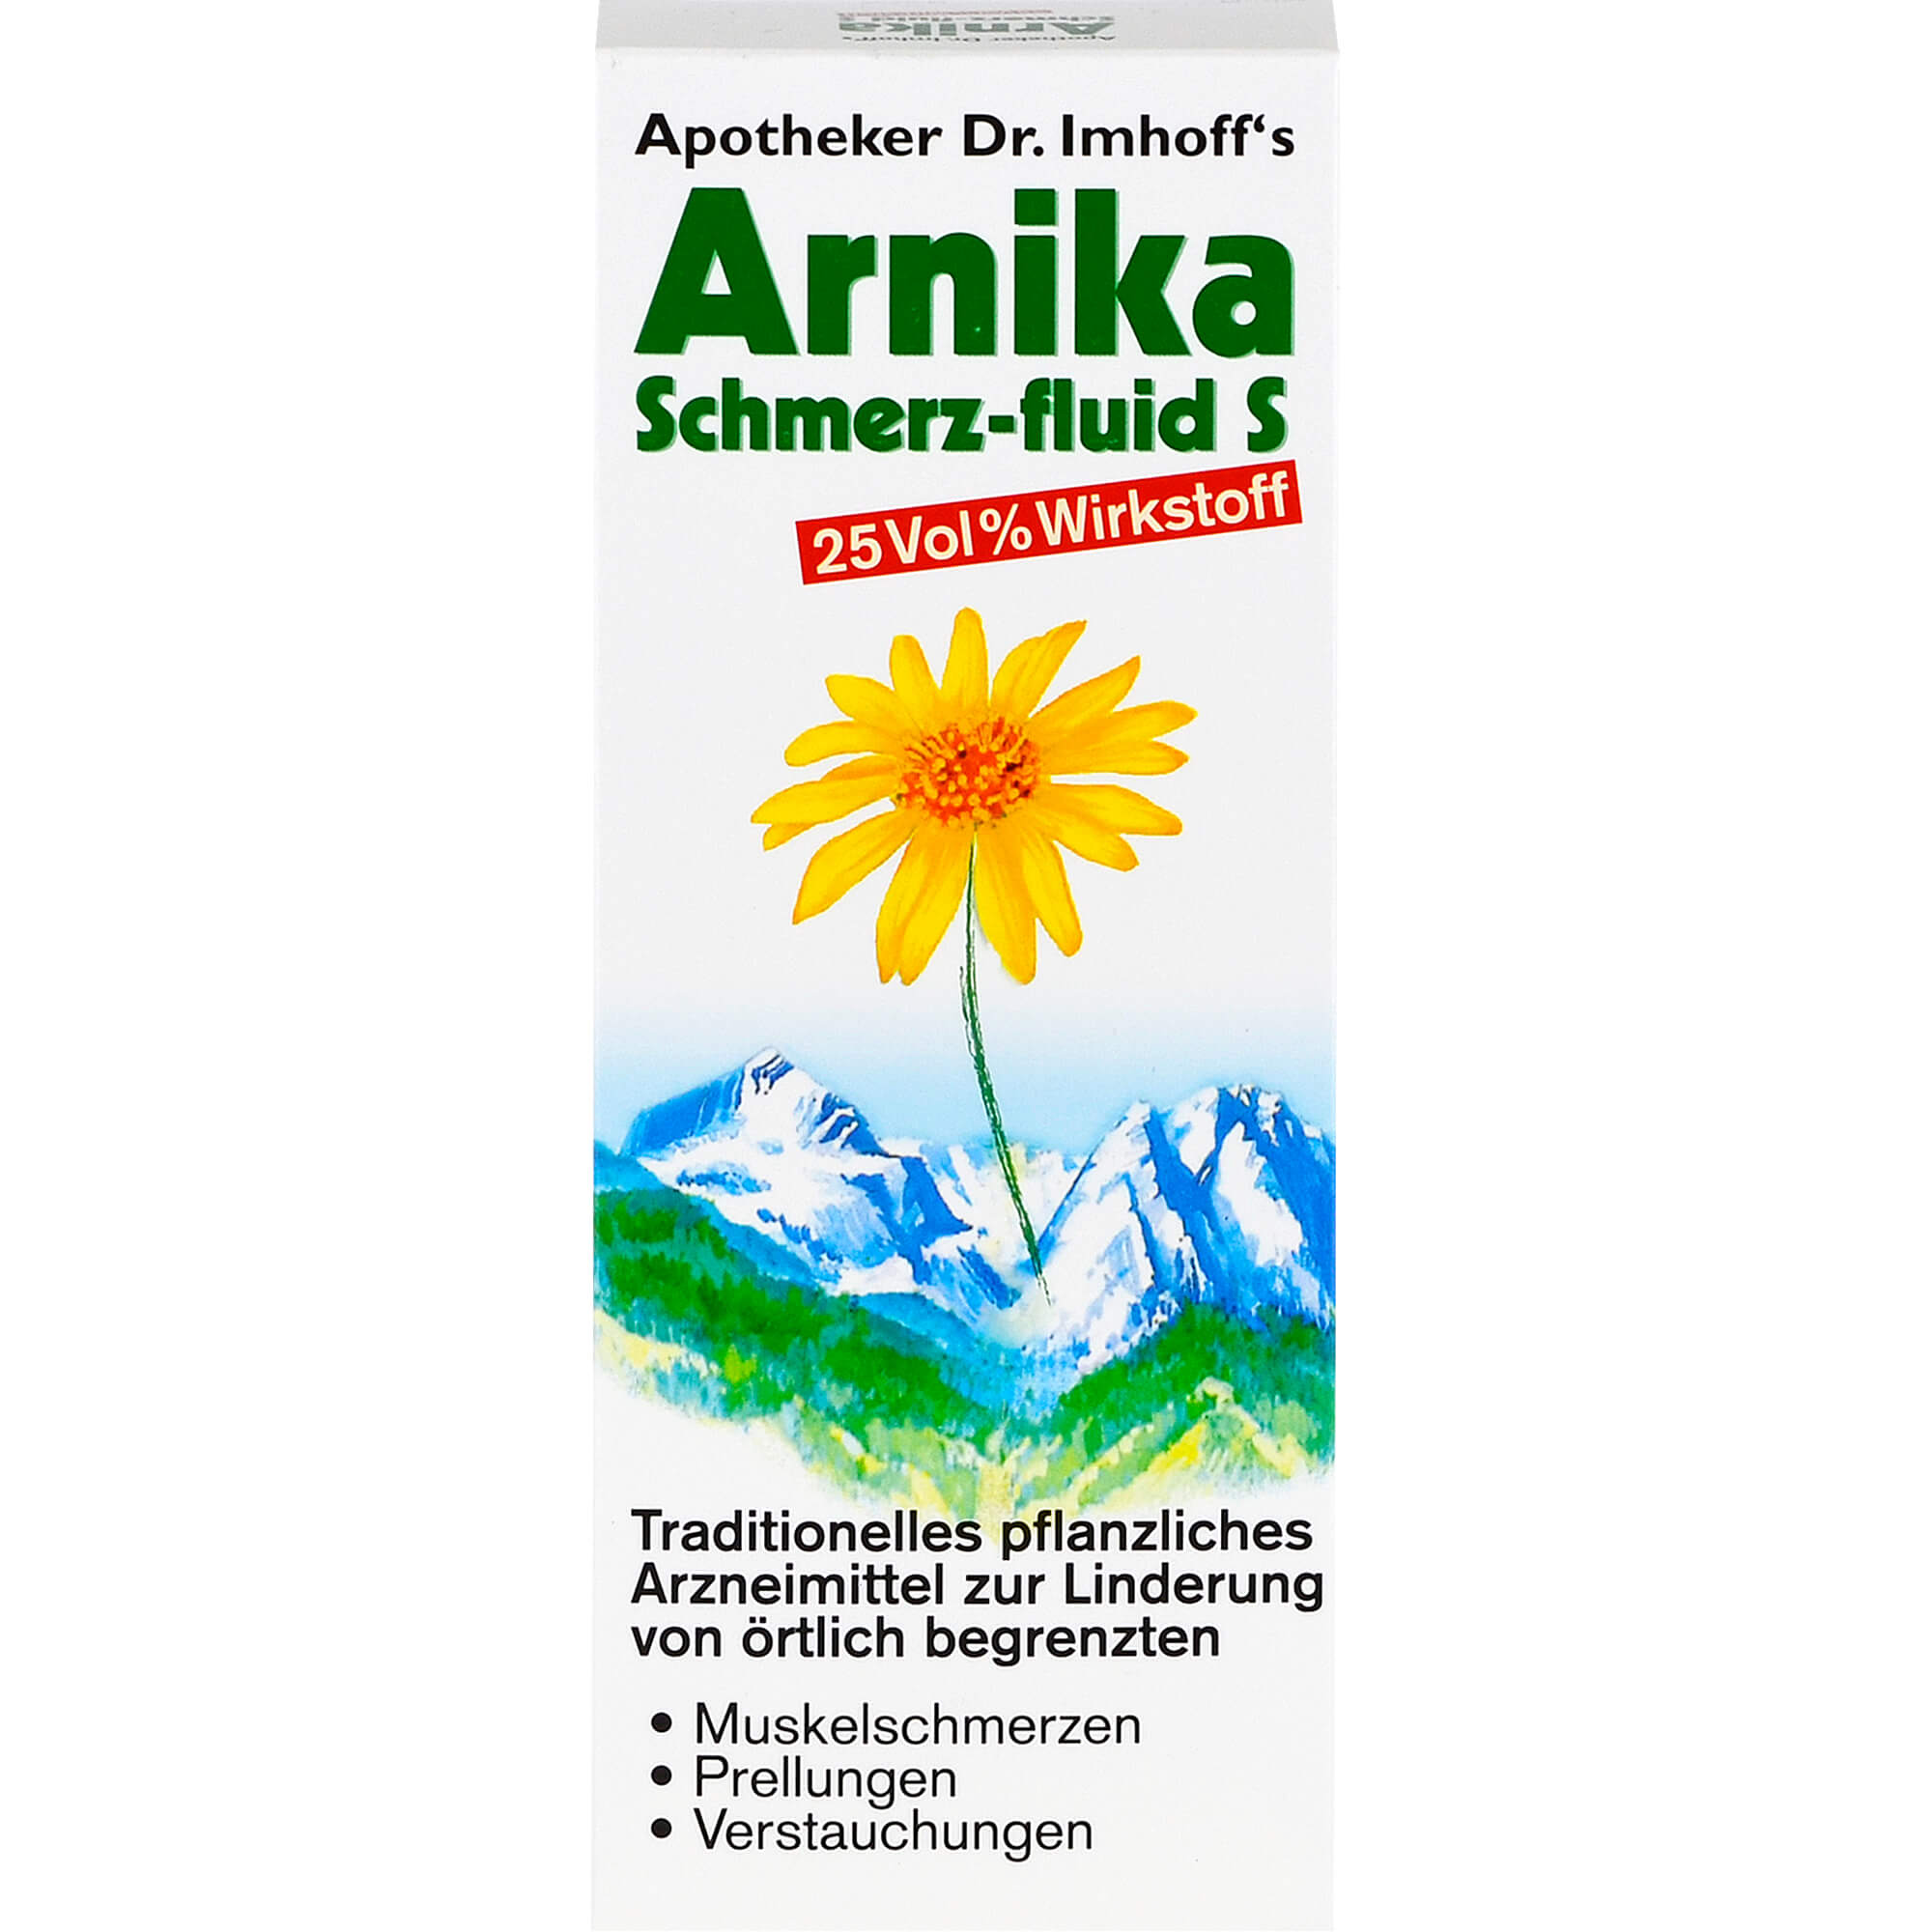 APOTHEKER DR.Imhoff's Arnika Schmerz-fluid S